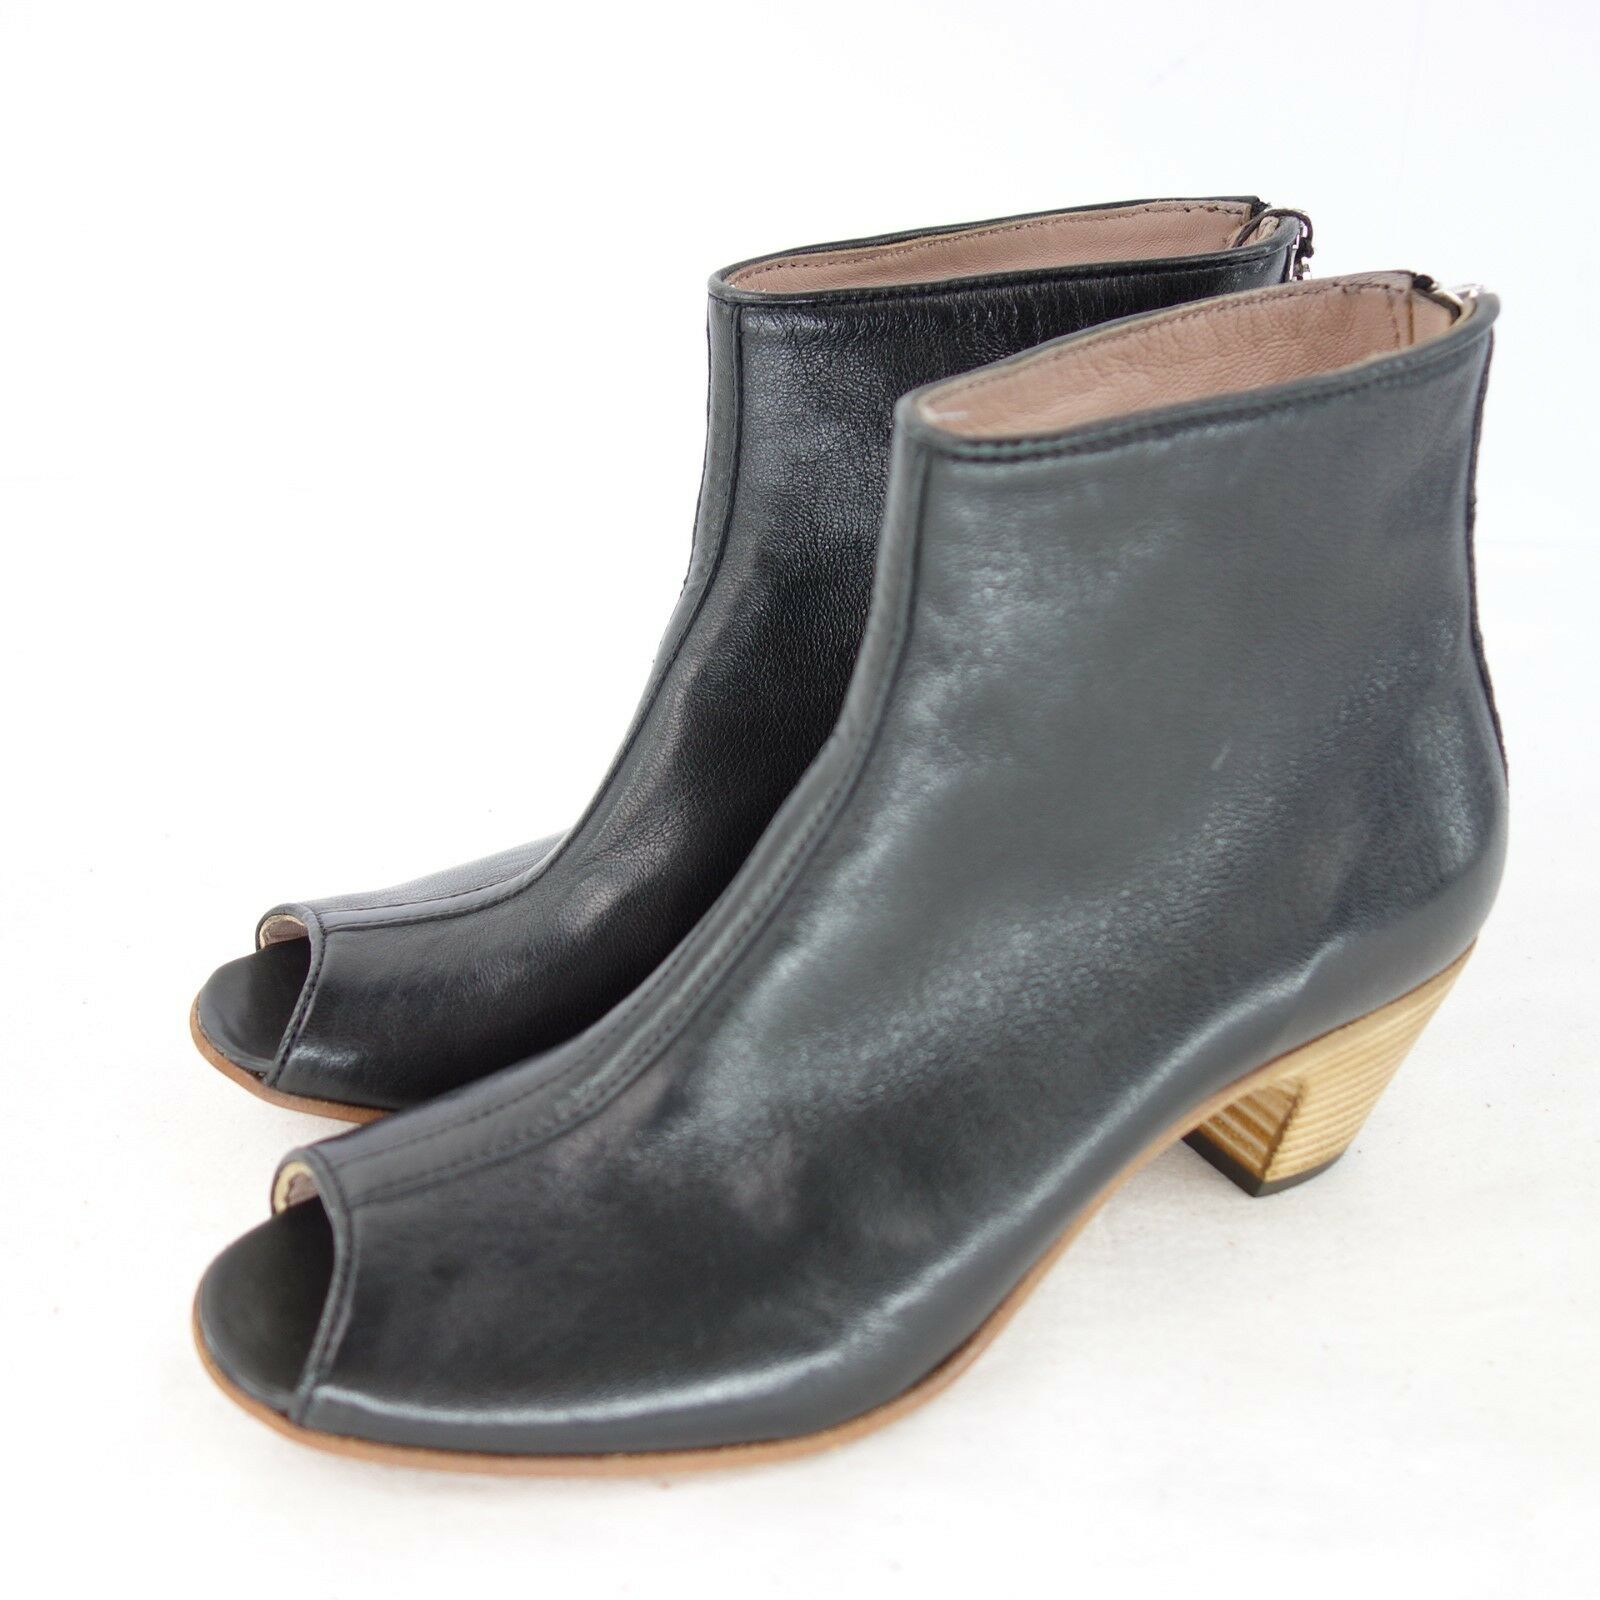 Corvani Damen Schuhe Ankle Stiefelette Boots Größe 37 Schwarz Leder Np 189 Neu